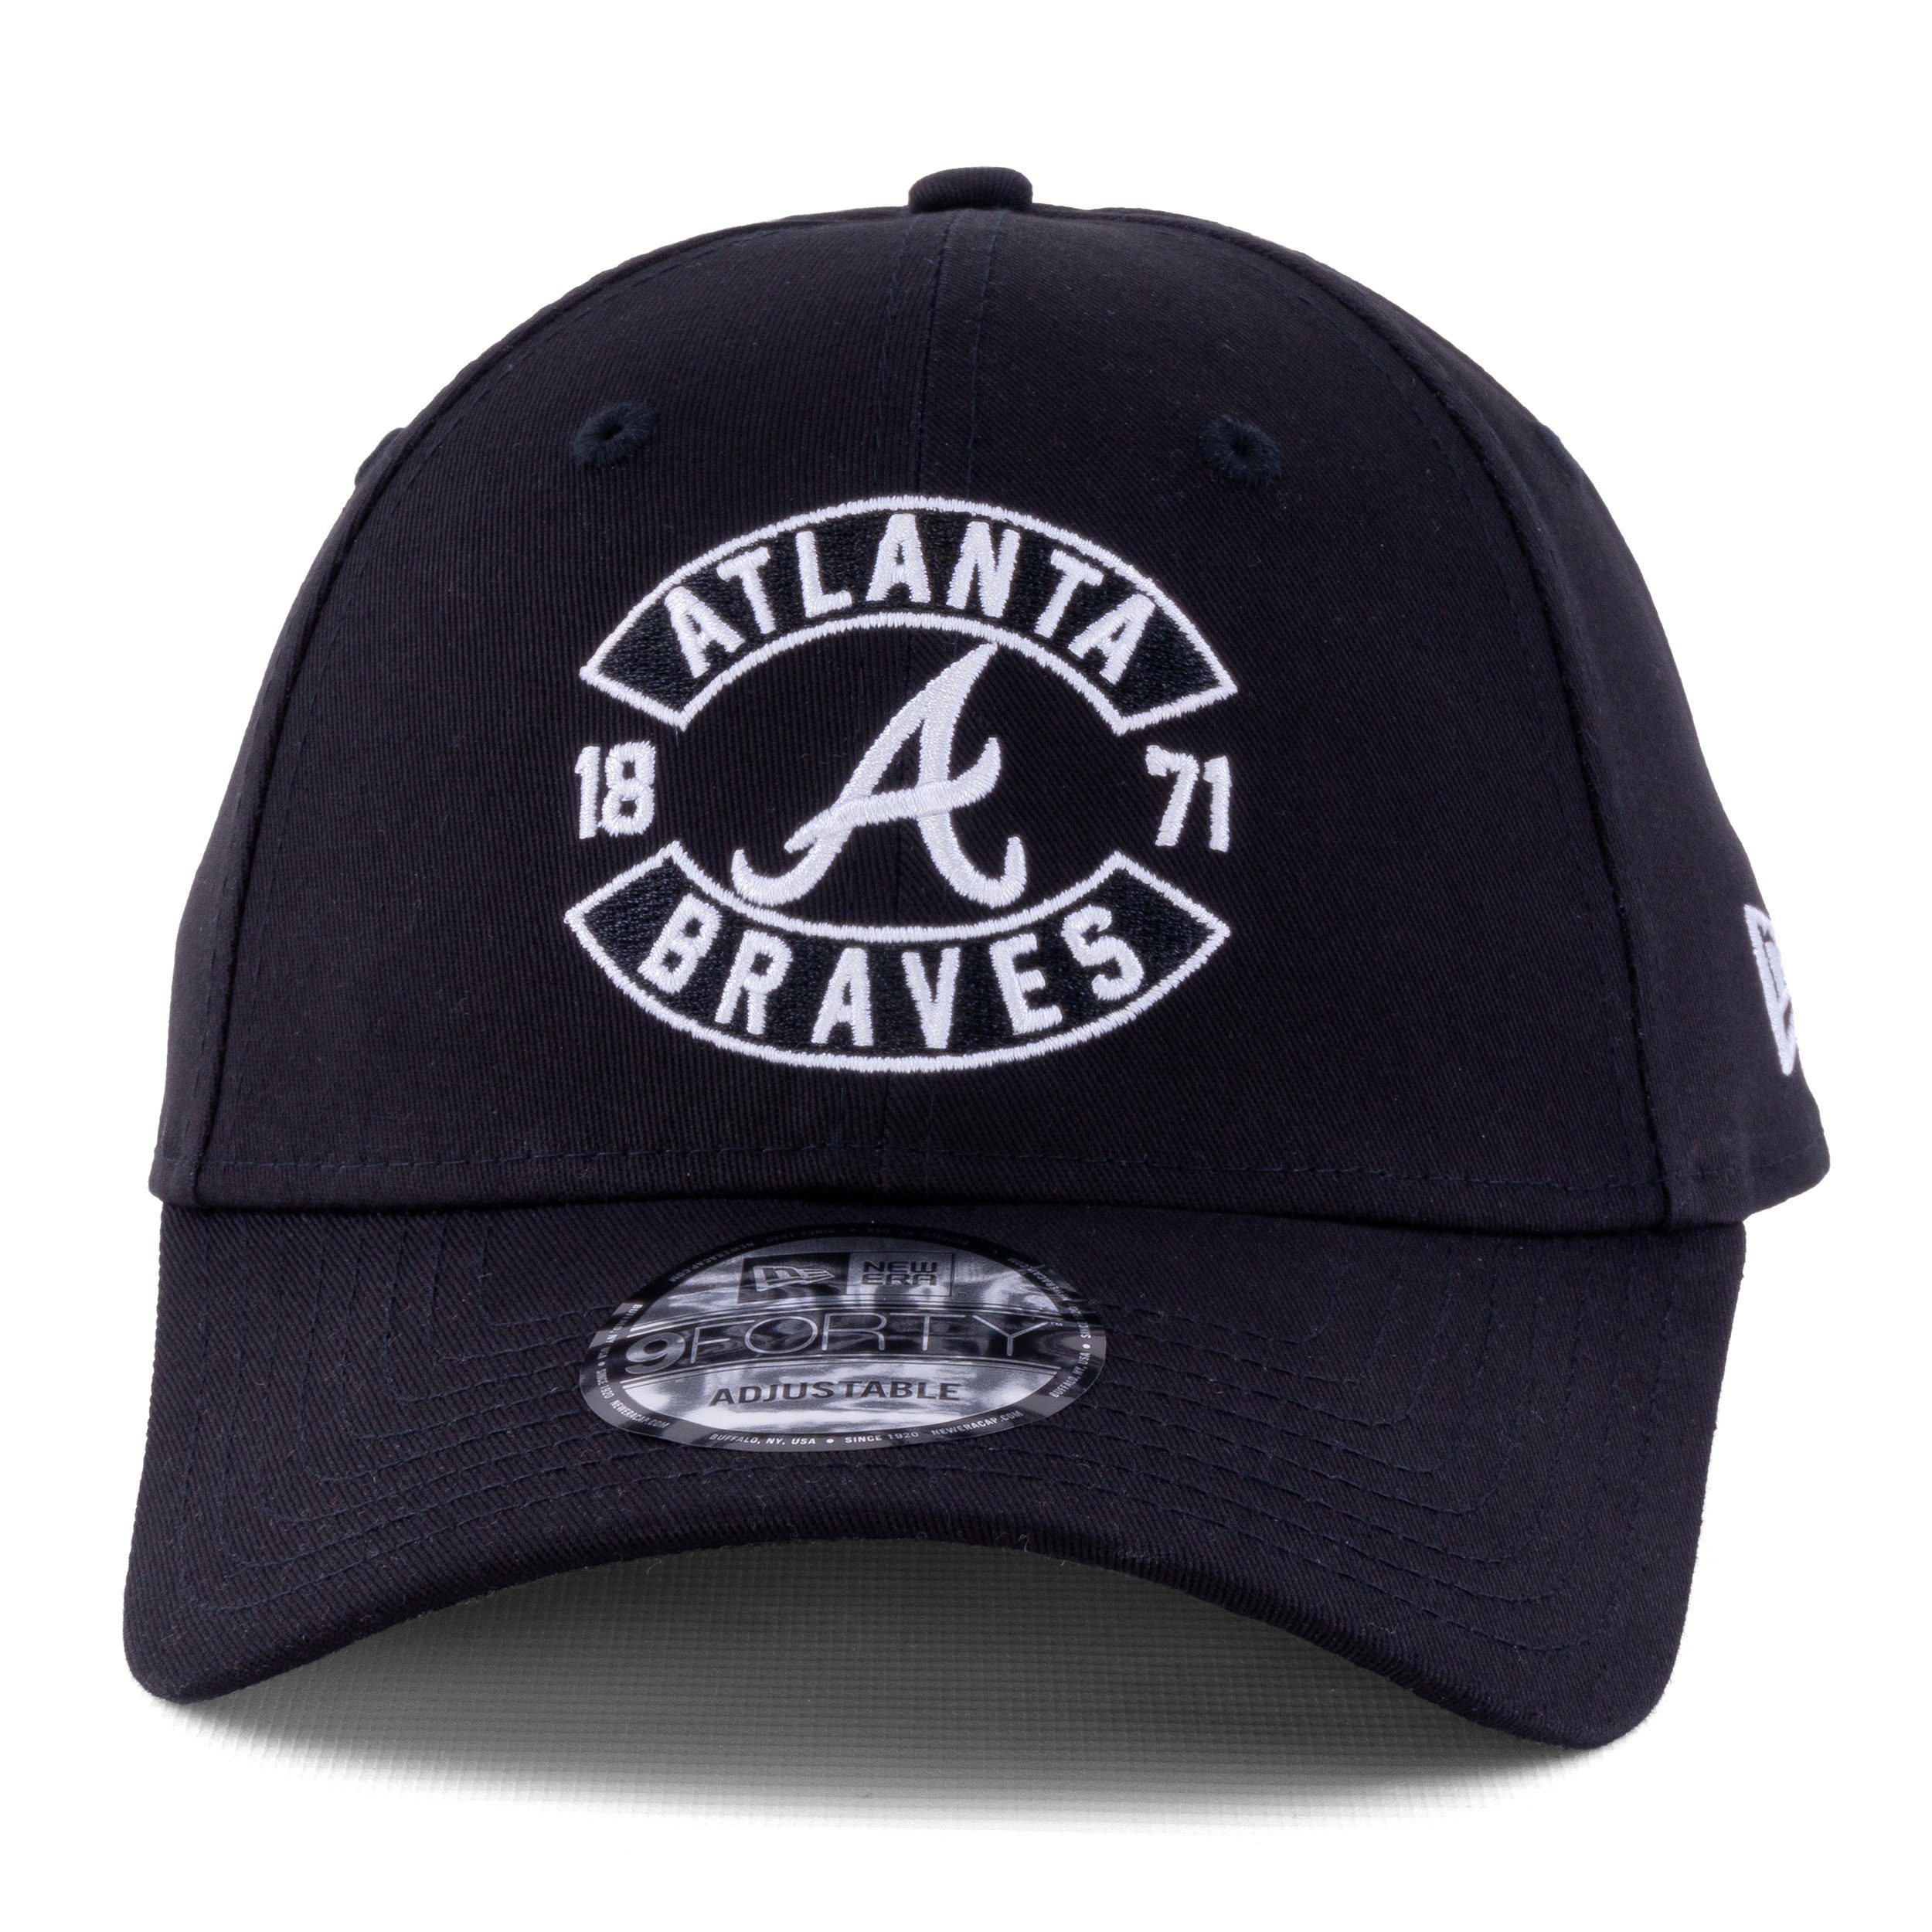 Era (1-St) Era Atlanta New Cap Cap MLB 9Forty New Baseball Bravers Cotton